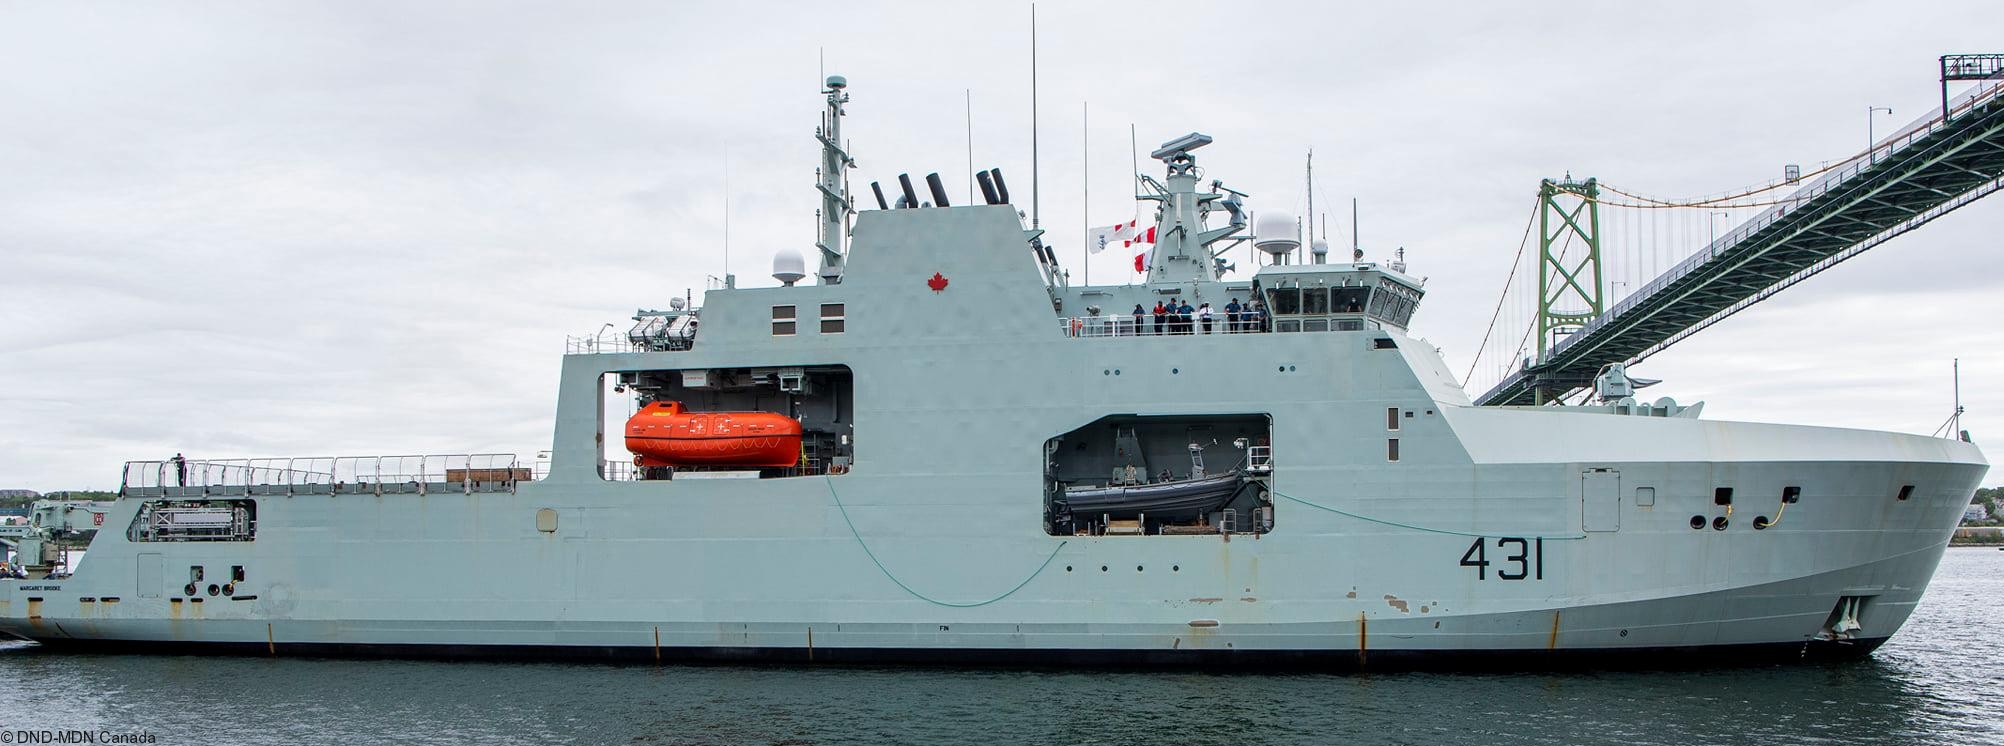 aopv-431 hmcs margaret brooke harry dewolf class arctic offshore patrol vessel ncsm royal canadian navy 03